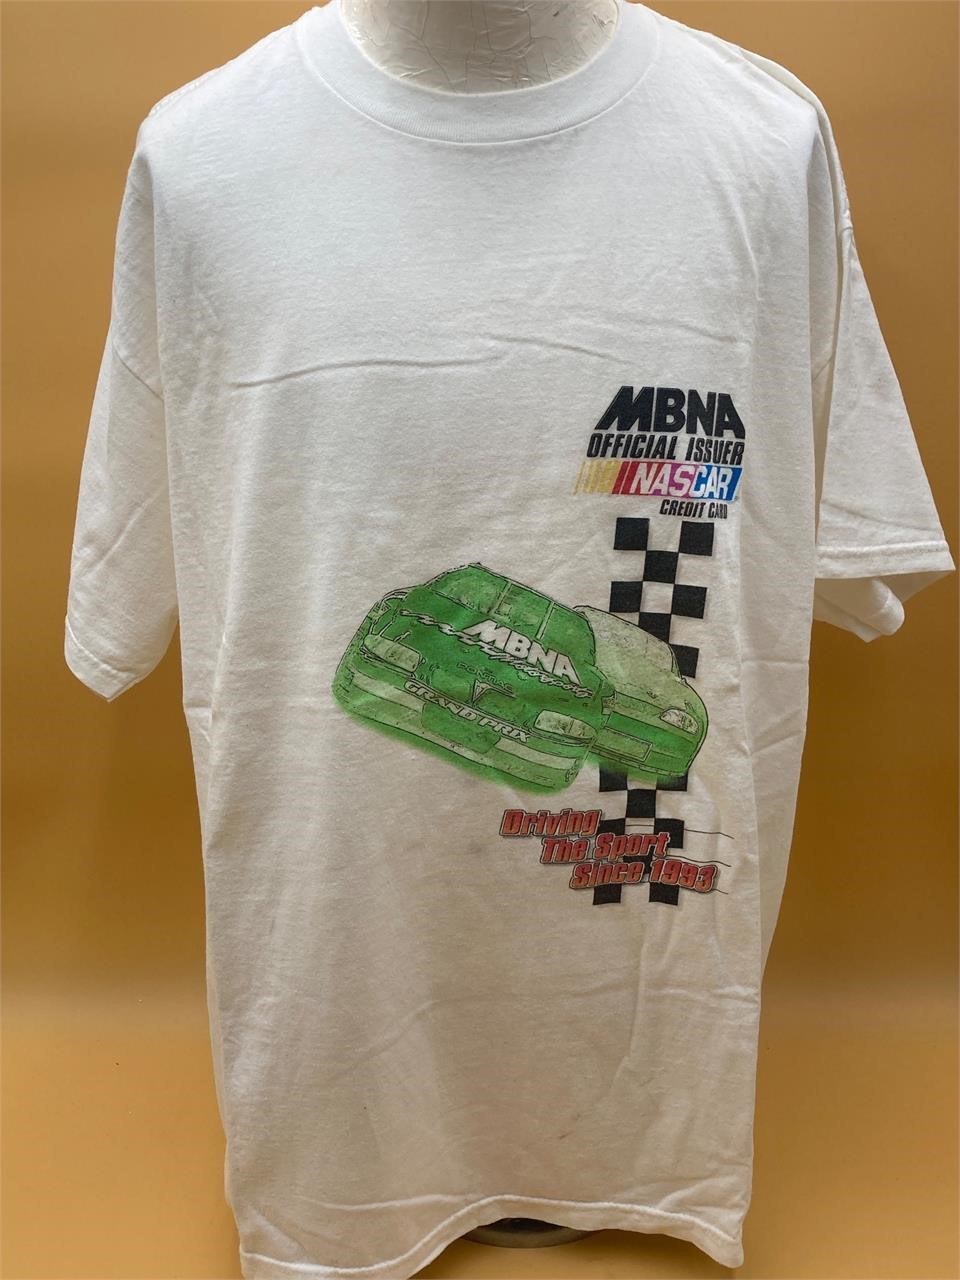 Vintage MBNA Nascar XL Shirt